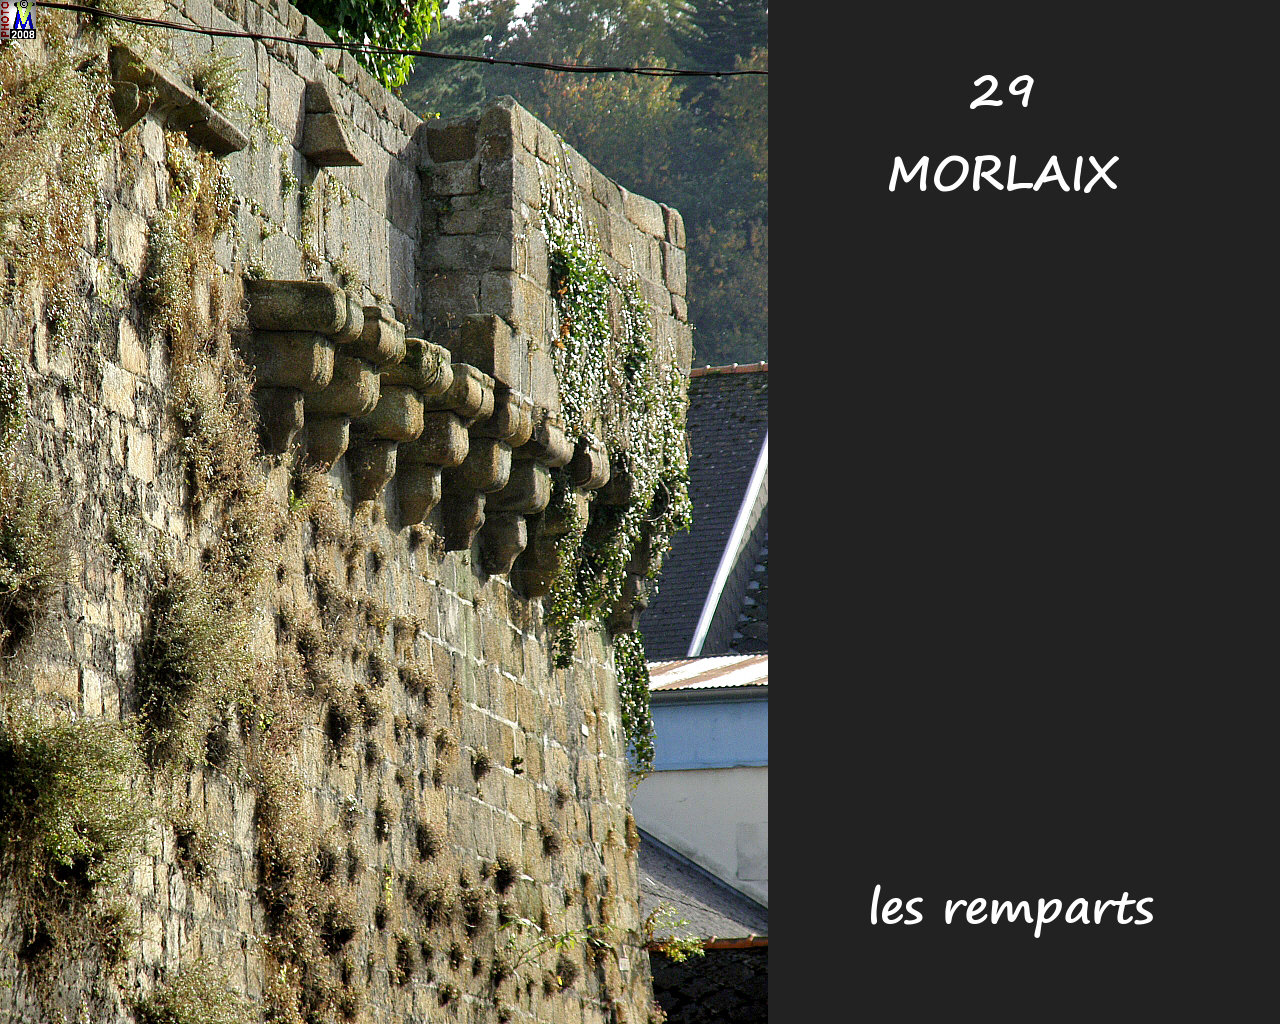 29MORLAIX_remparts_102.jpg